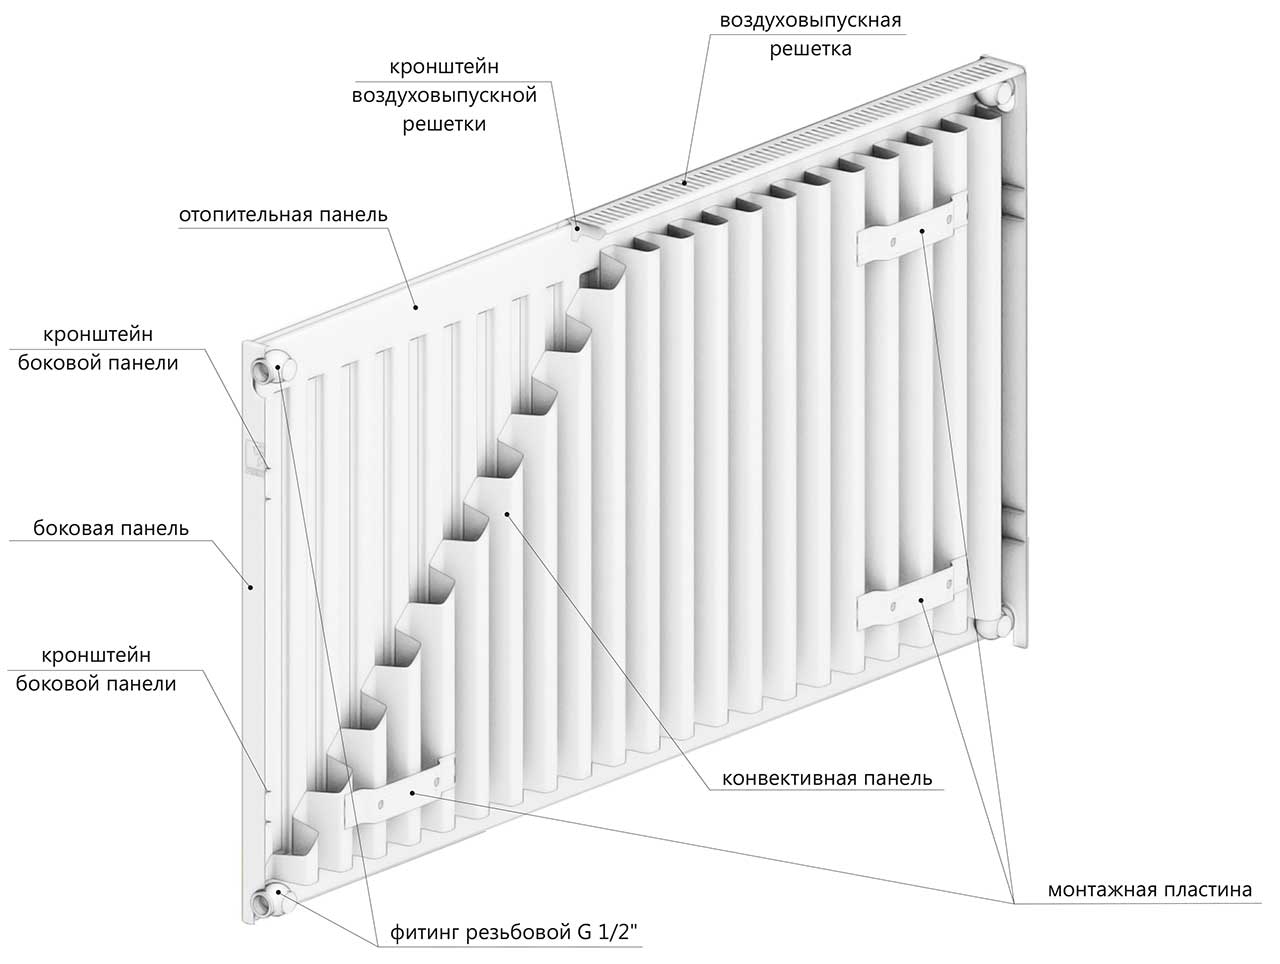 Radiator panel din otel DD PREMIUM TIP 11 500x1200